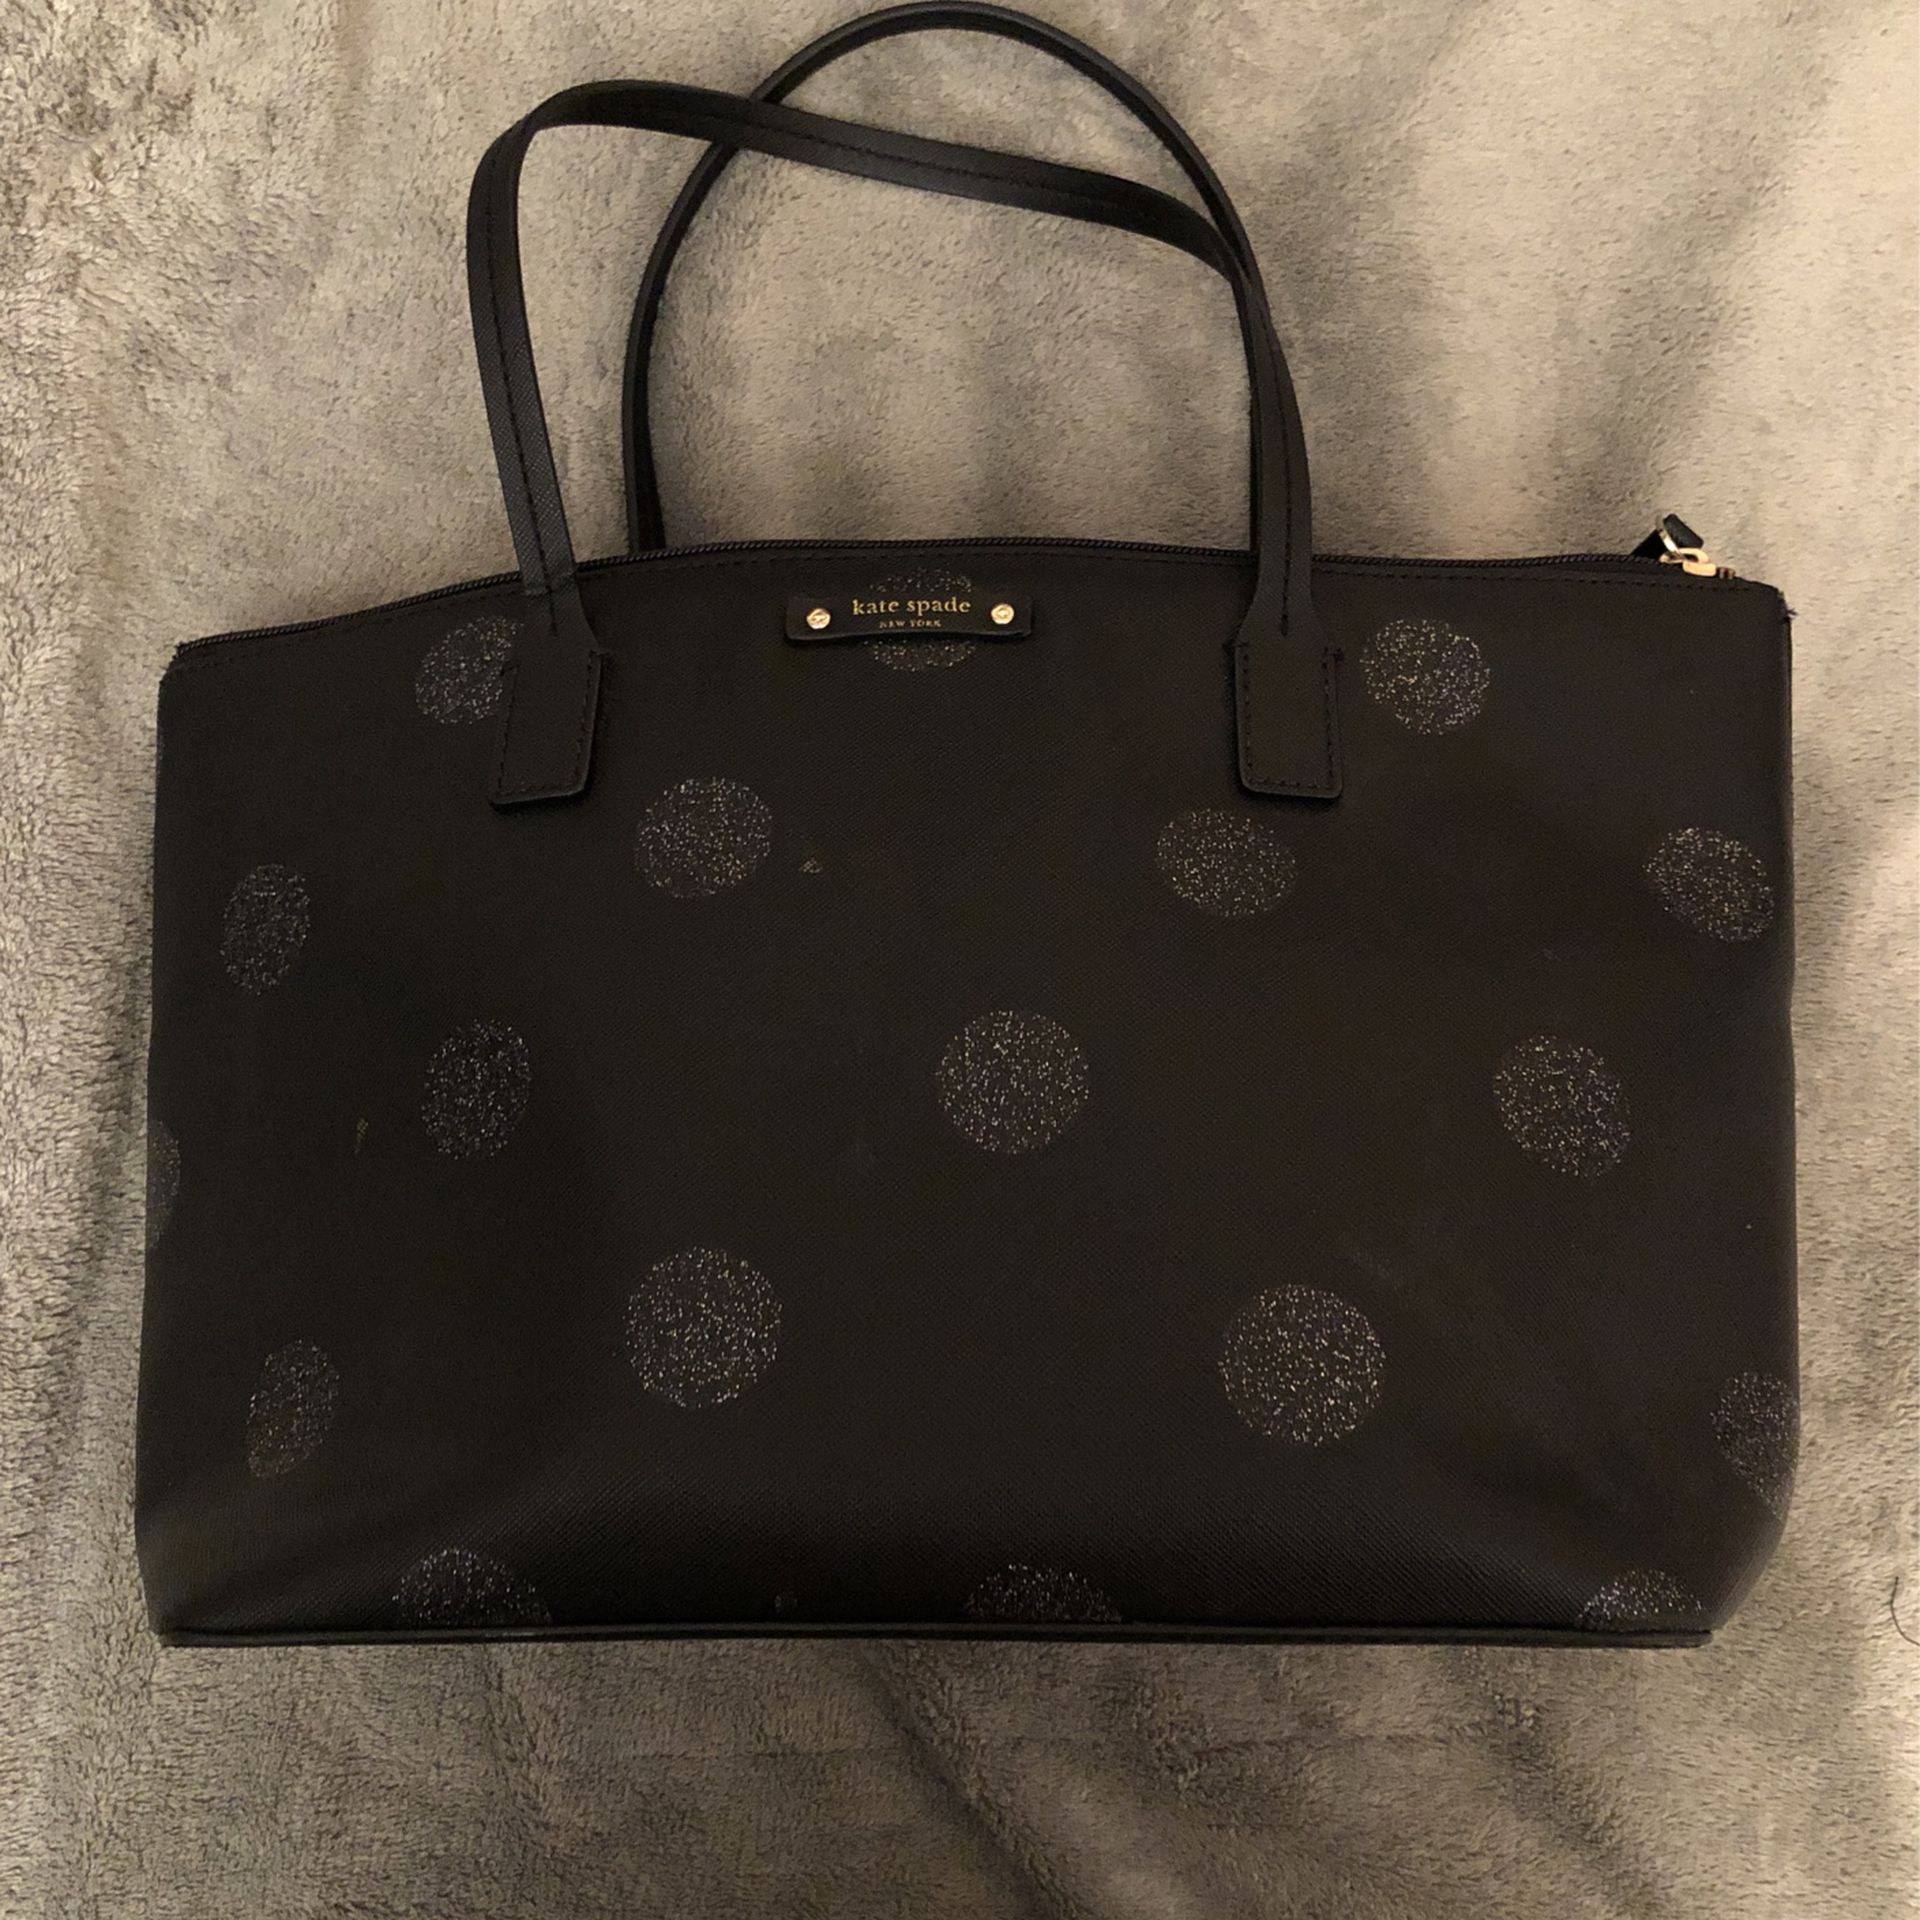 Black Sparkly Kate Spade Bag